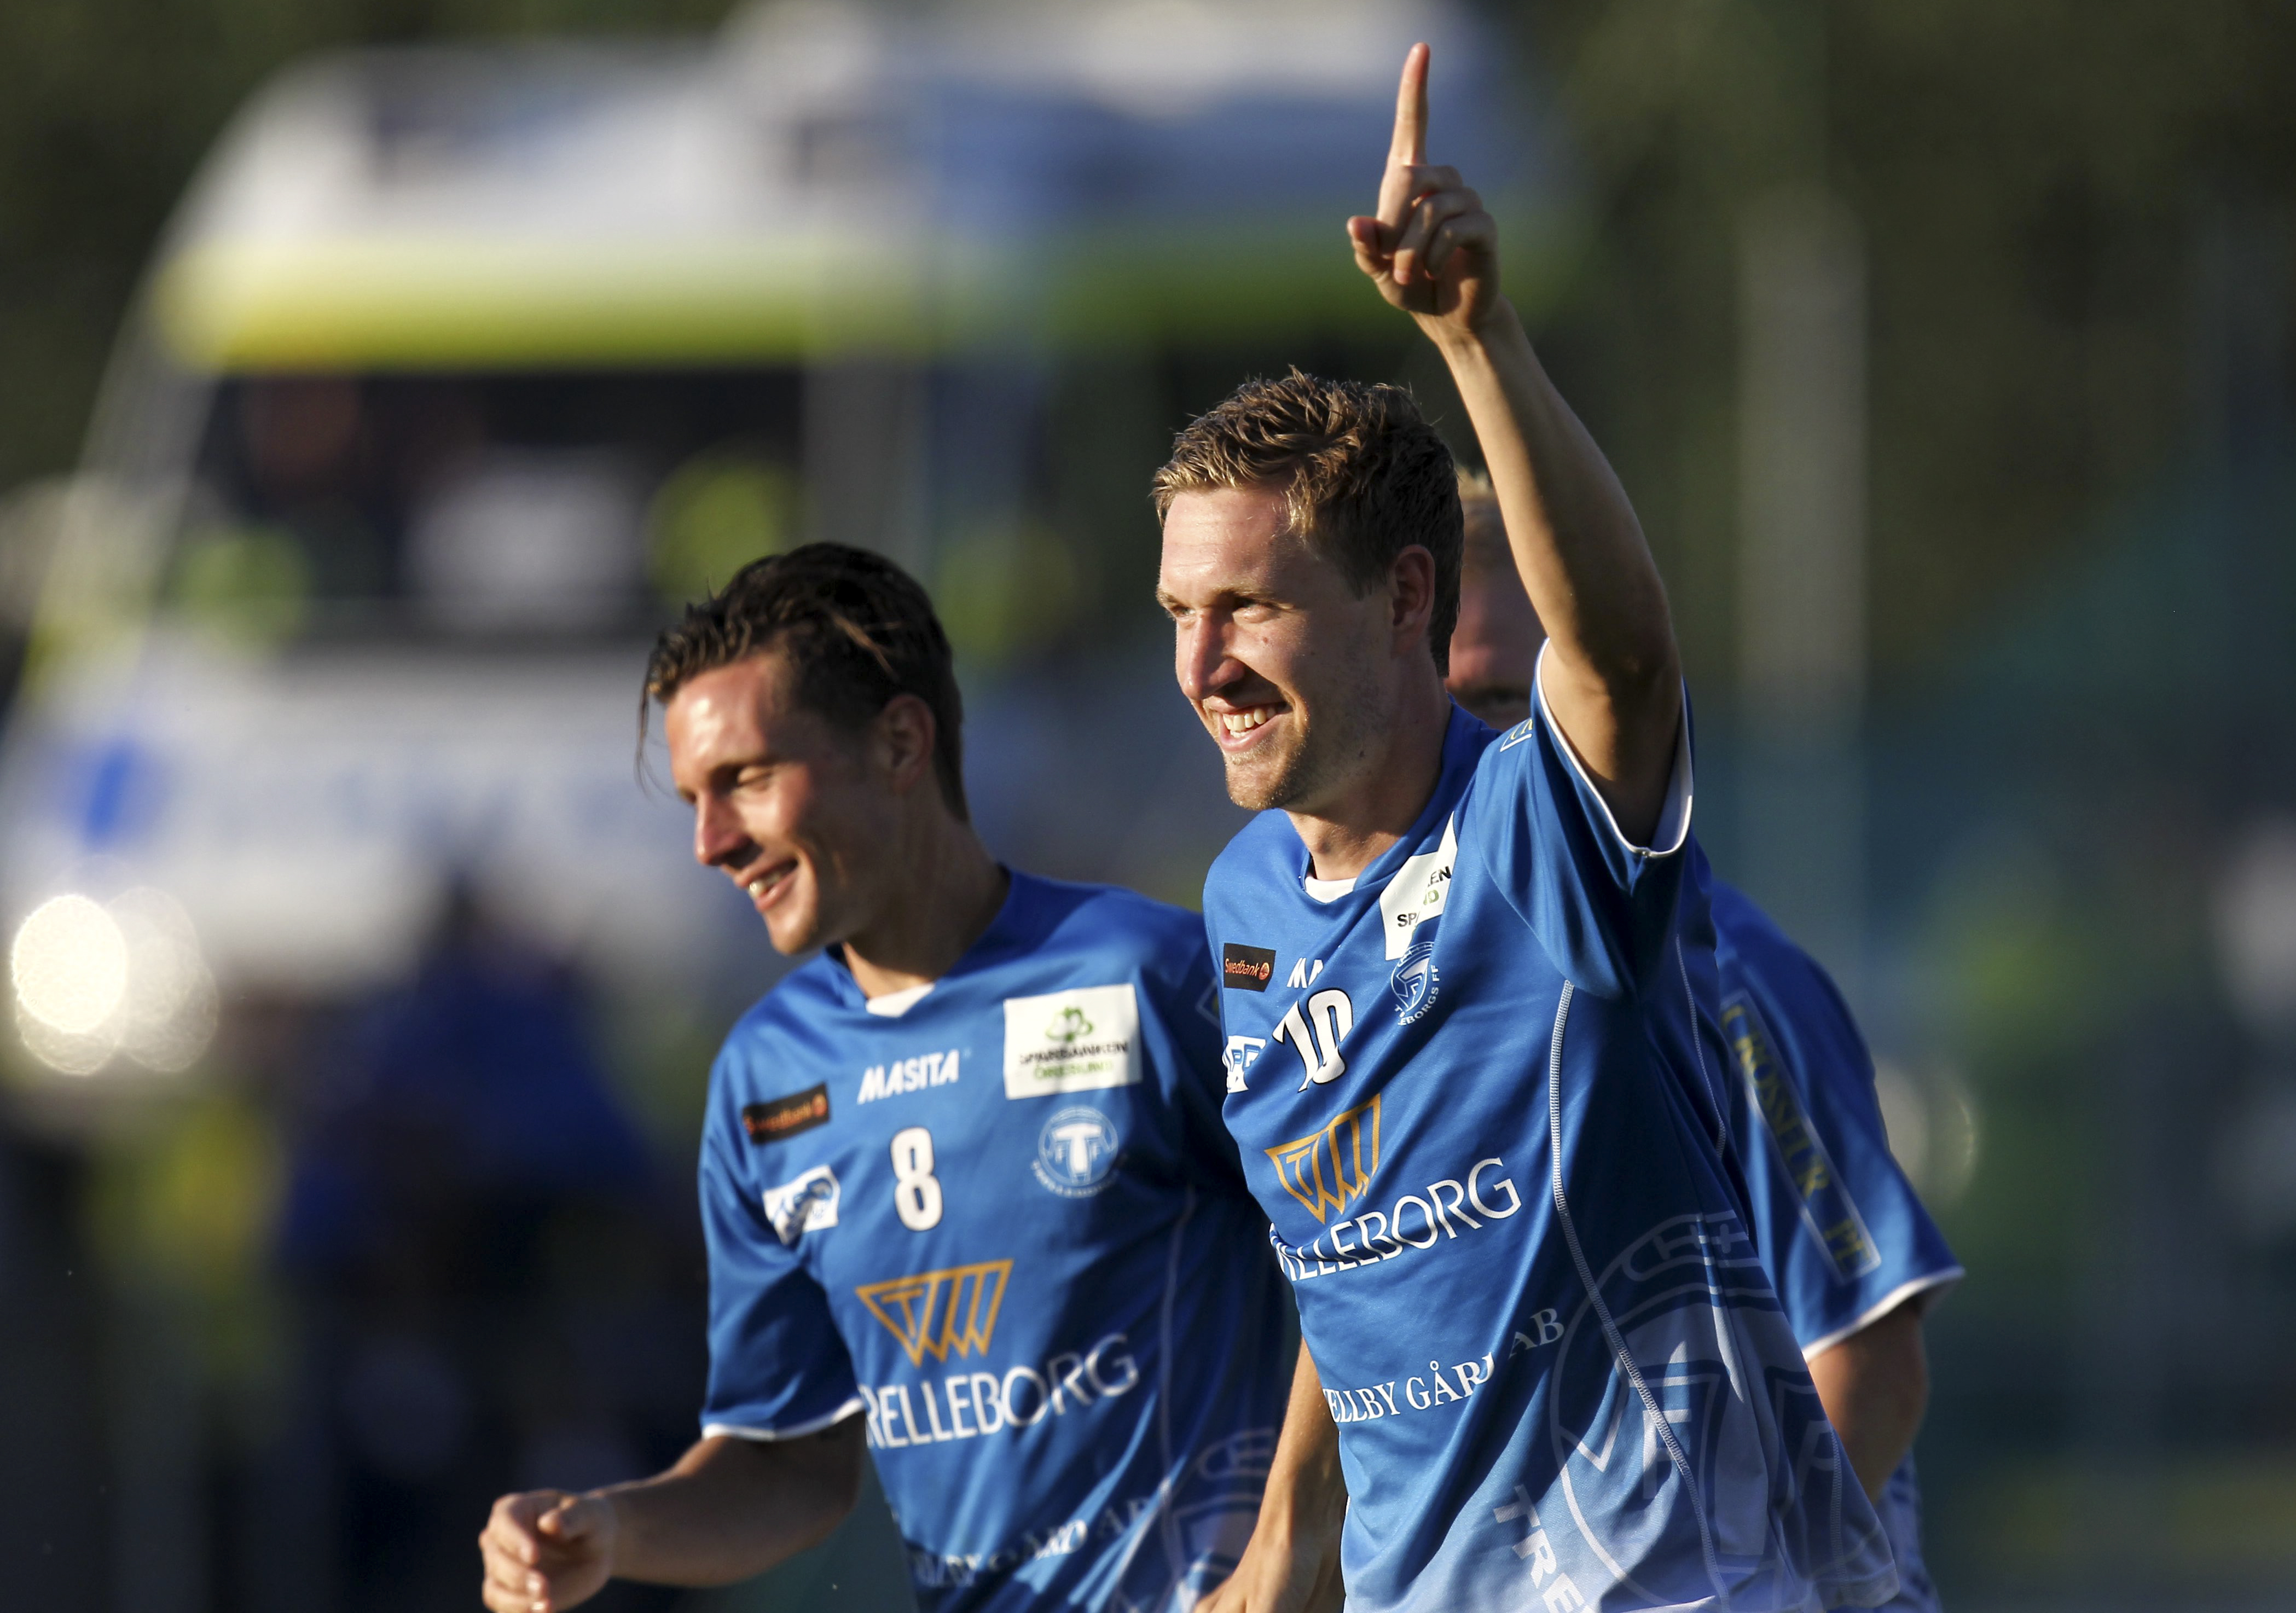 Marcus Pode satte matchens sista mål när Trelleborg slog IFK Göteborg med 2-0.